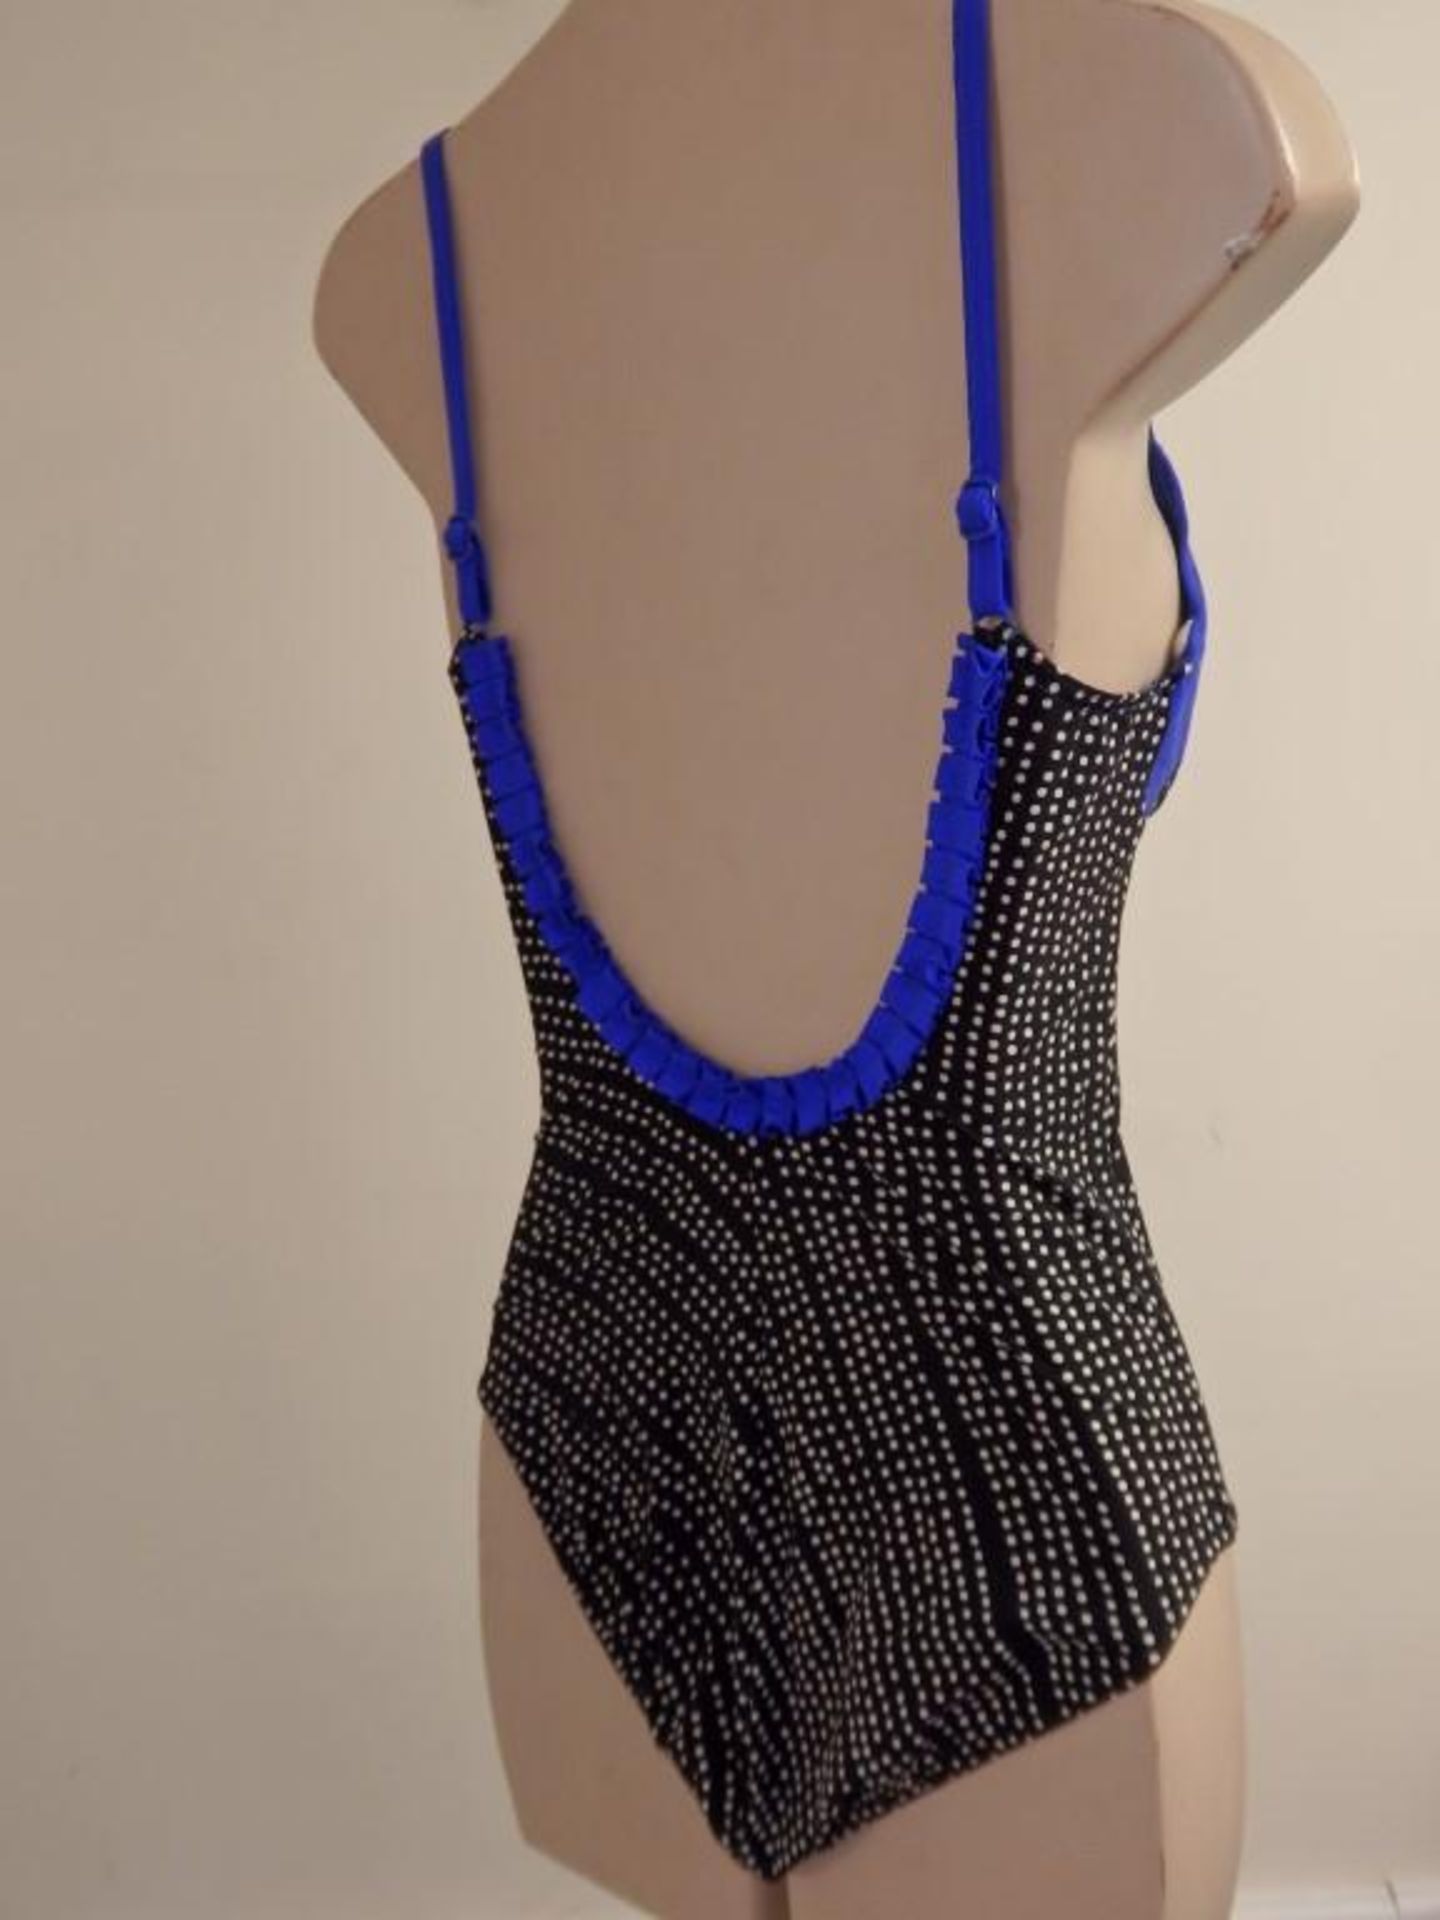 1 x Rasurel - Black Polka dot with royal blue trim &frill Tobago Swimsuit - B21039 - Size 2C - UK 32 - Image 6 of 8